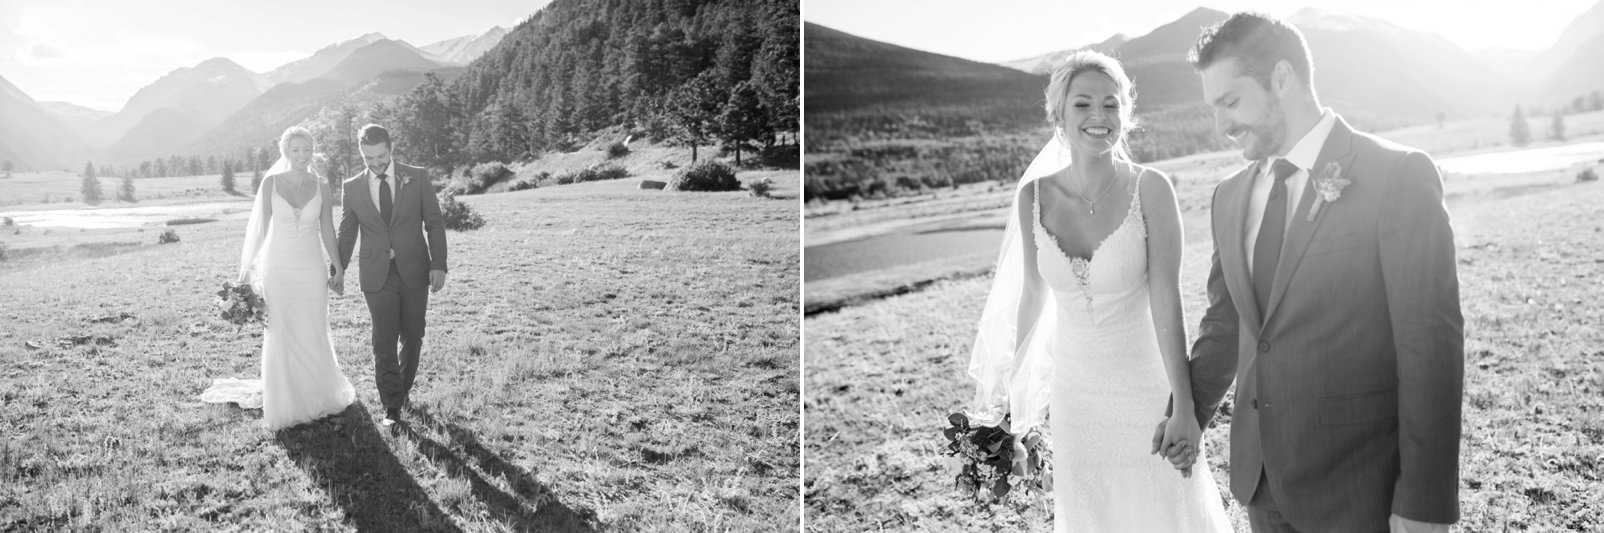 rocky mountain national park wedding photography